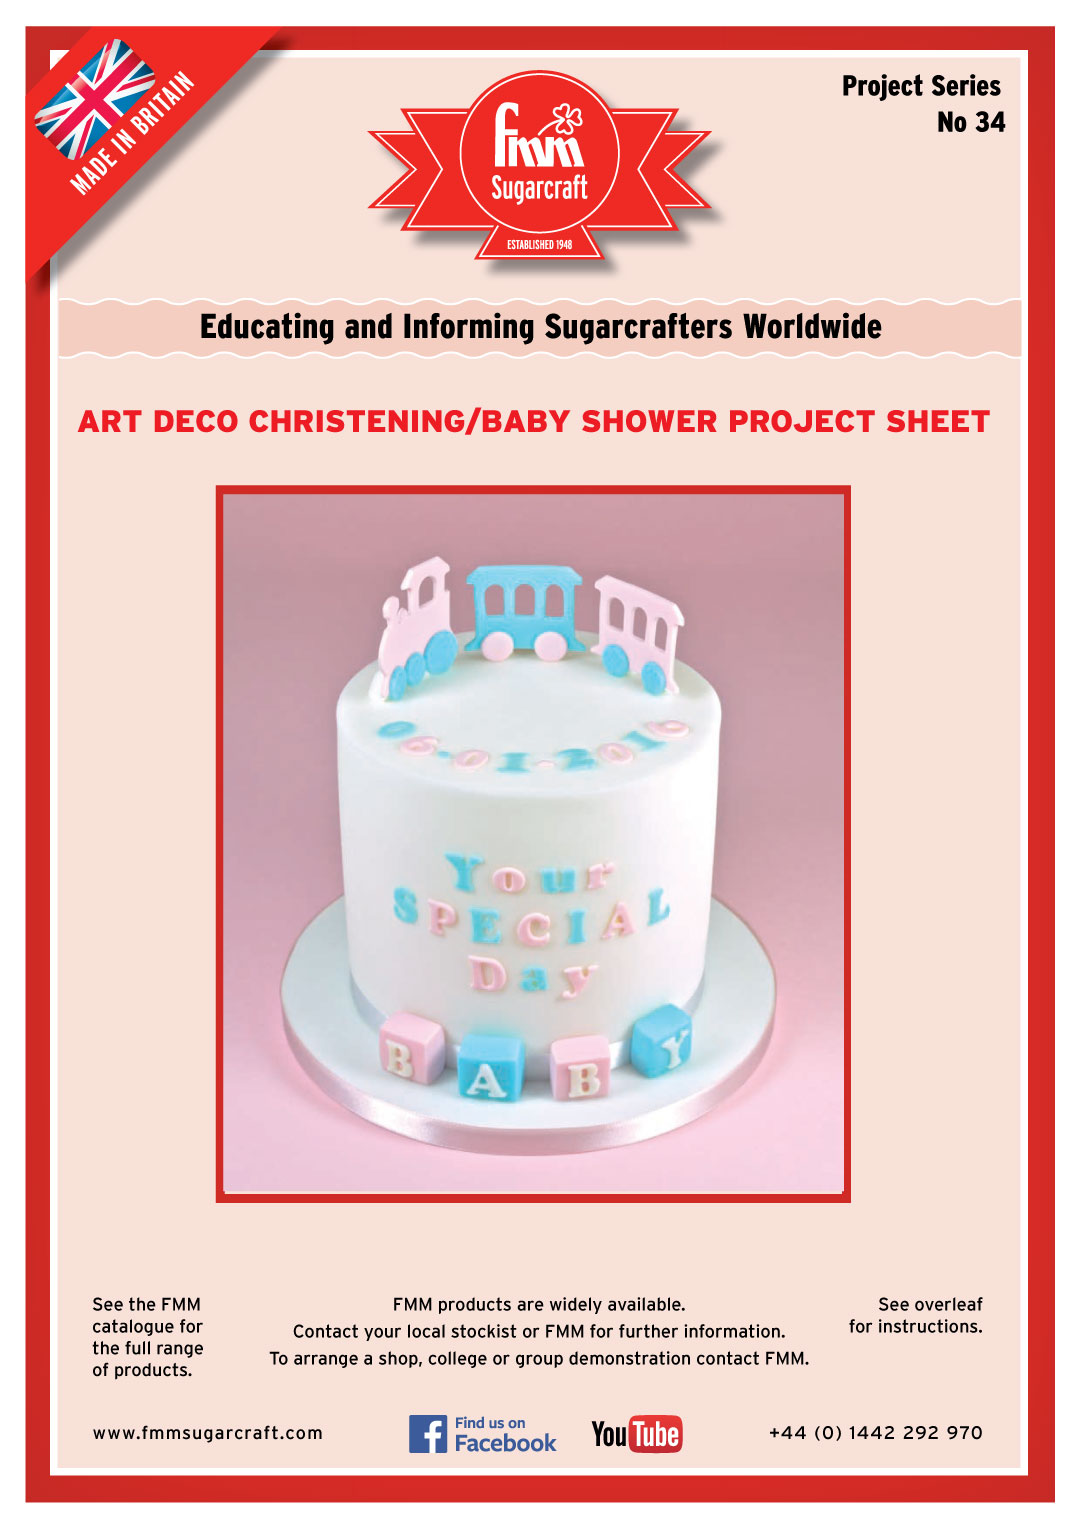 Make an Art Deco Baby Shower Cake